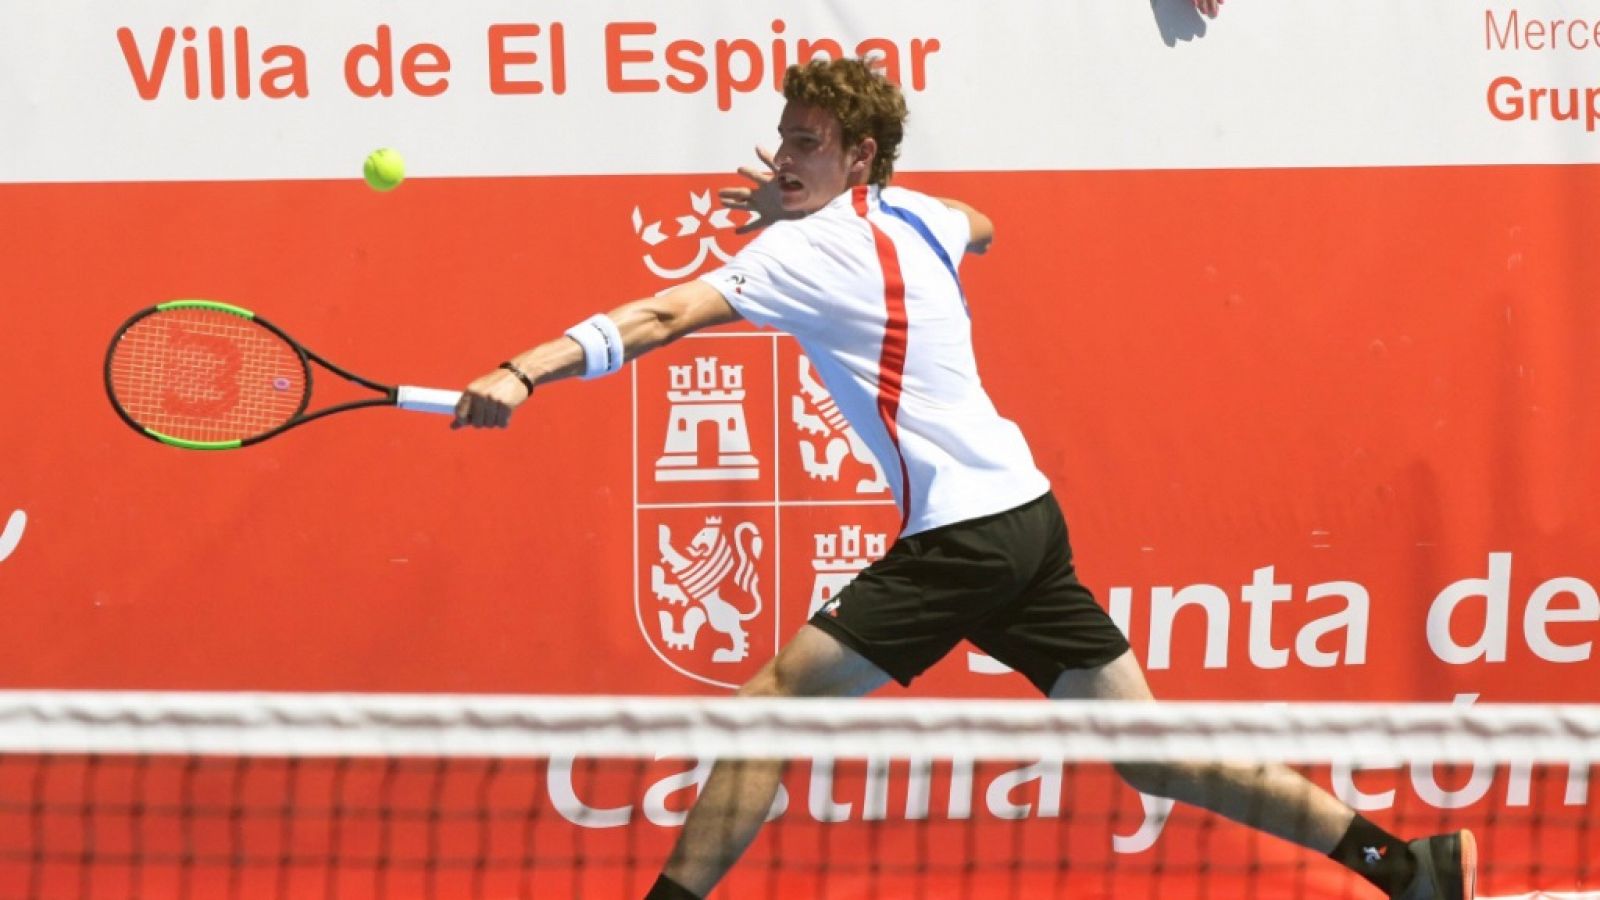 Tenis - Open Castilla y León "Villa de El Espinar" 2018 Final: U. Humbert-A. Menéndez